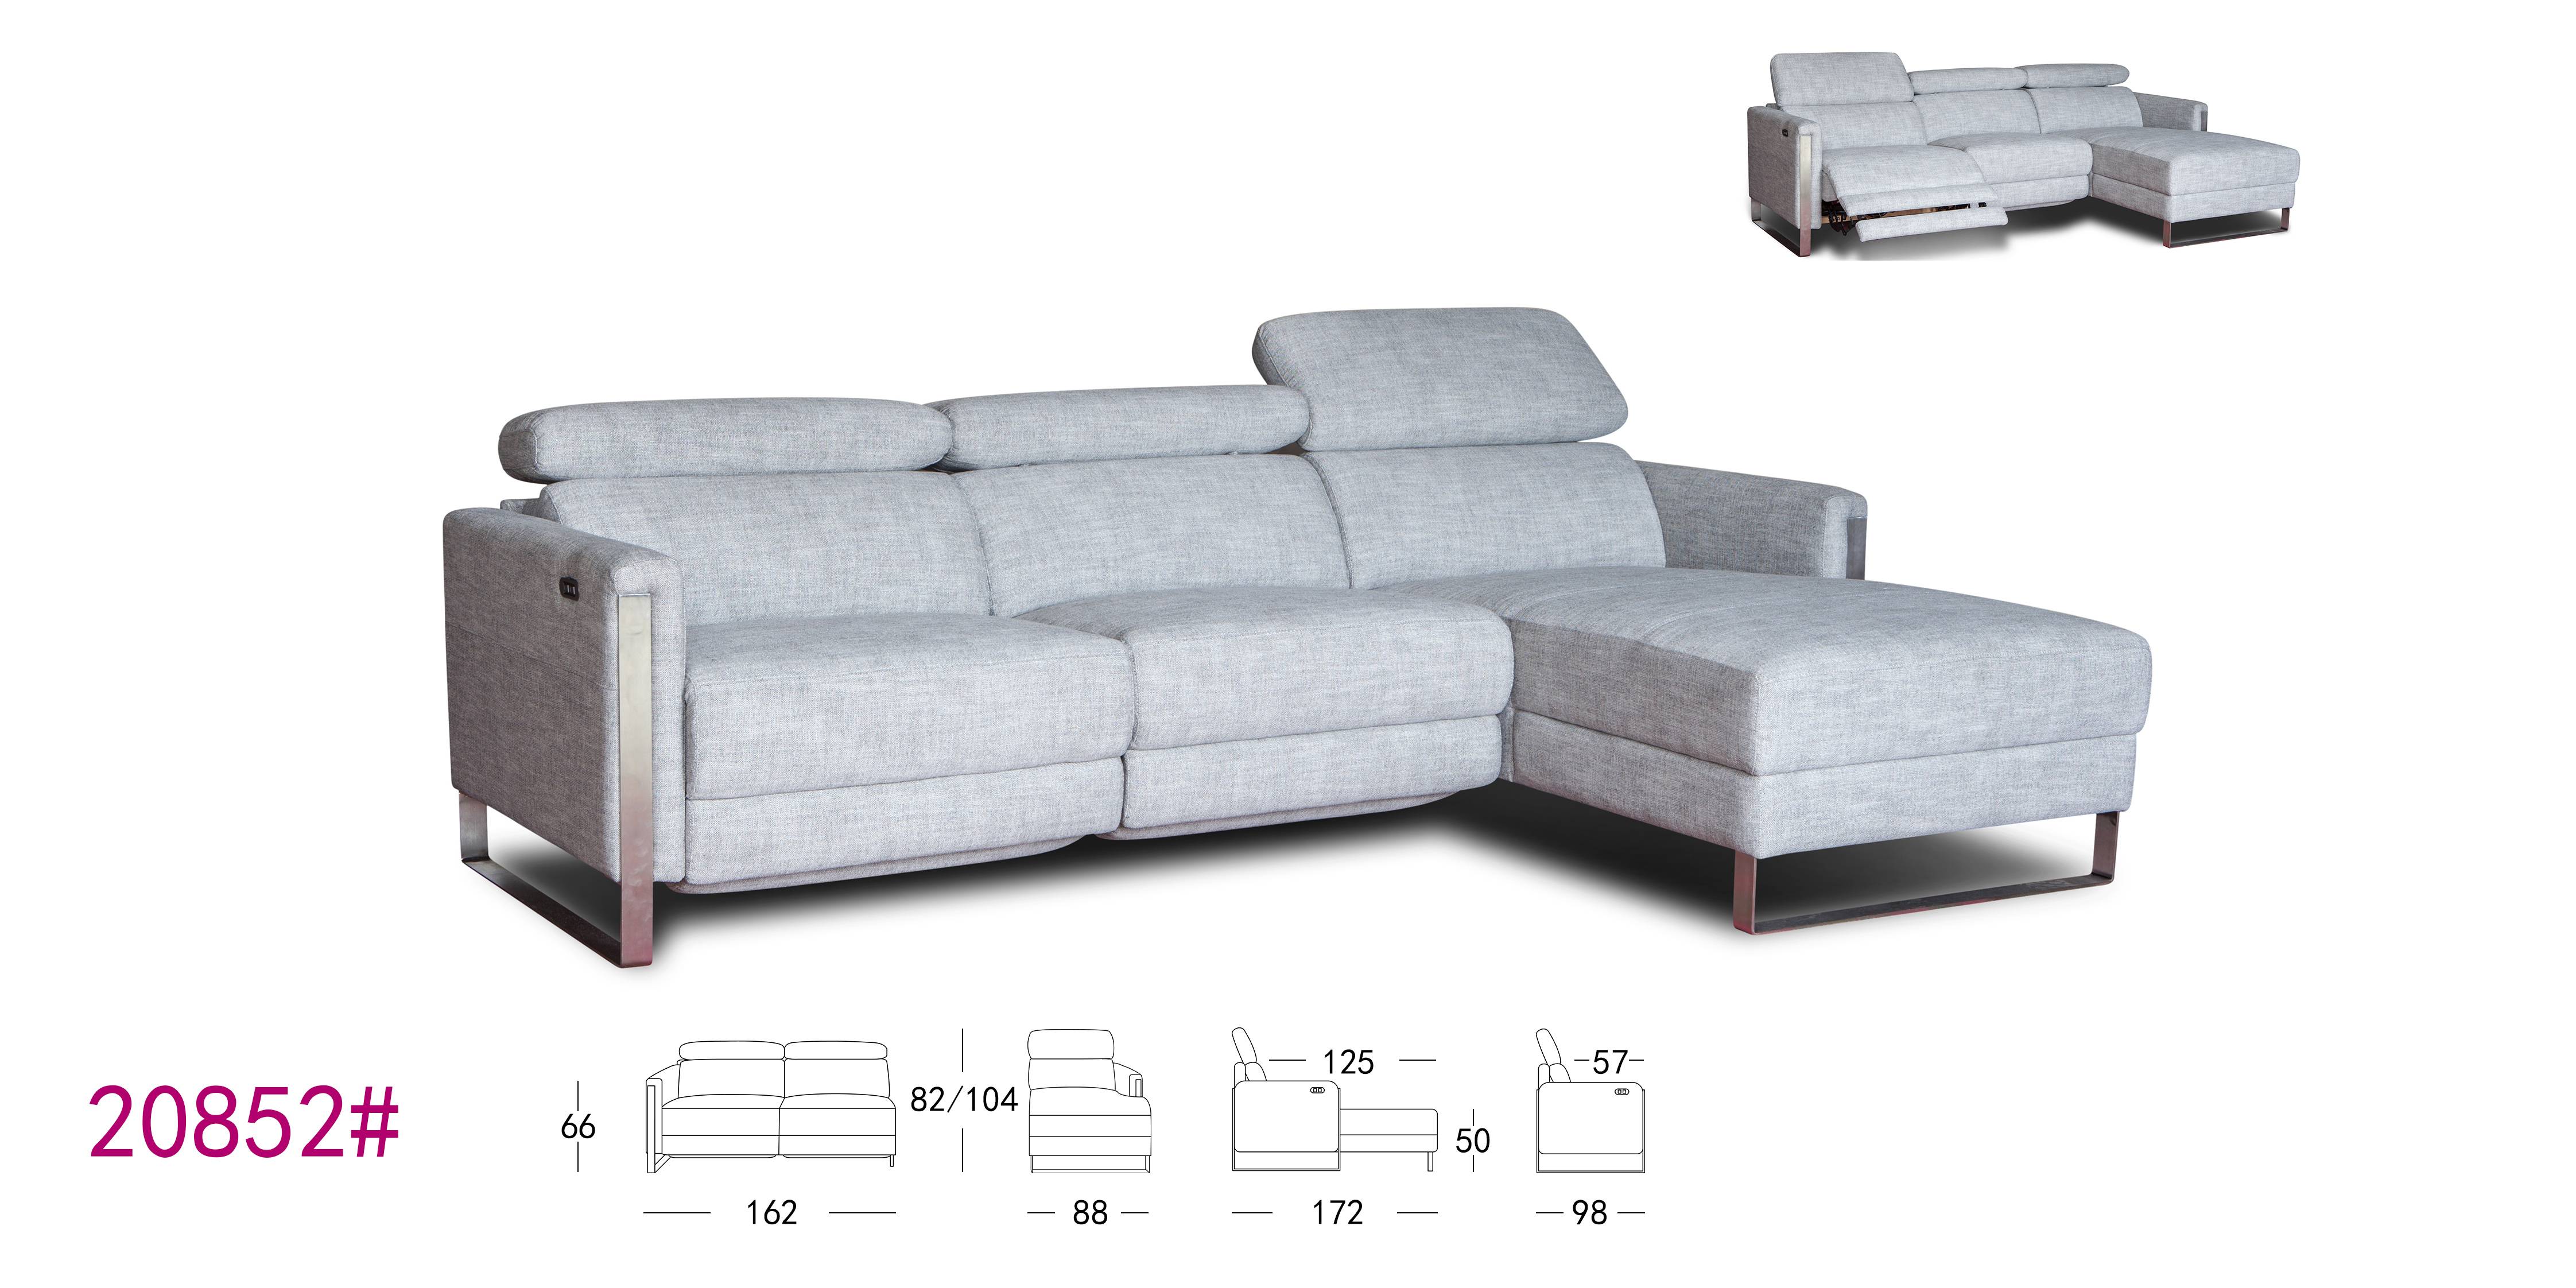 Modern simple lounge fabric corner recliner sofa